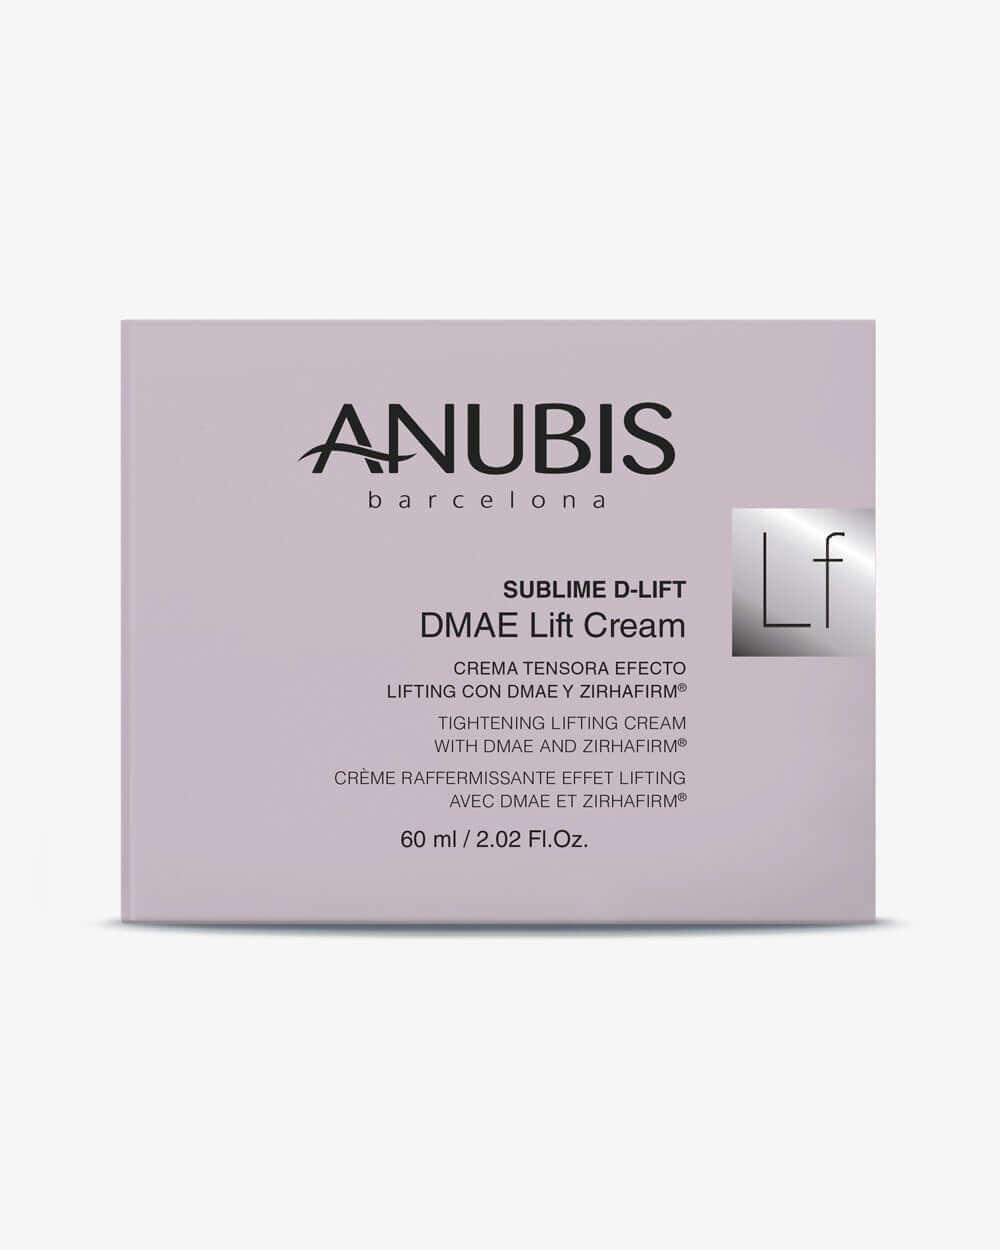 Anubis DMAE Lift Cream - Centro de Estética Itziar y Mariángeles